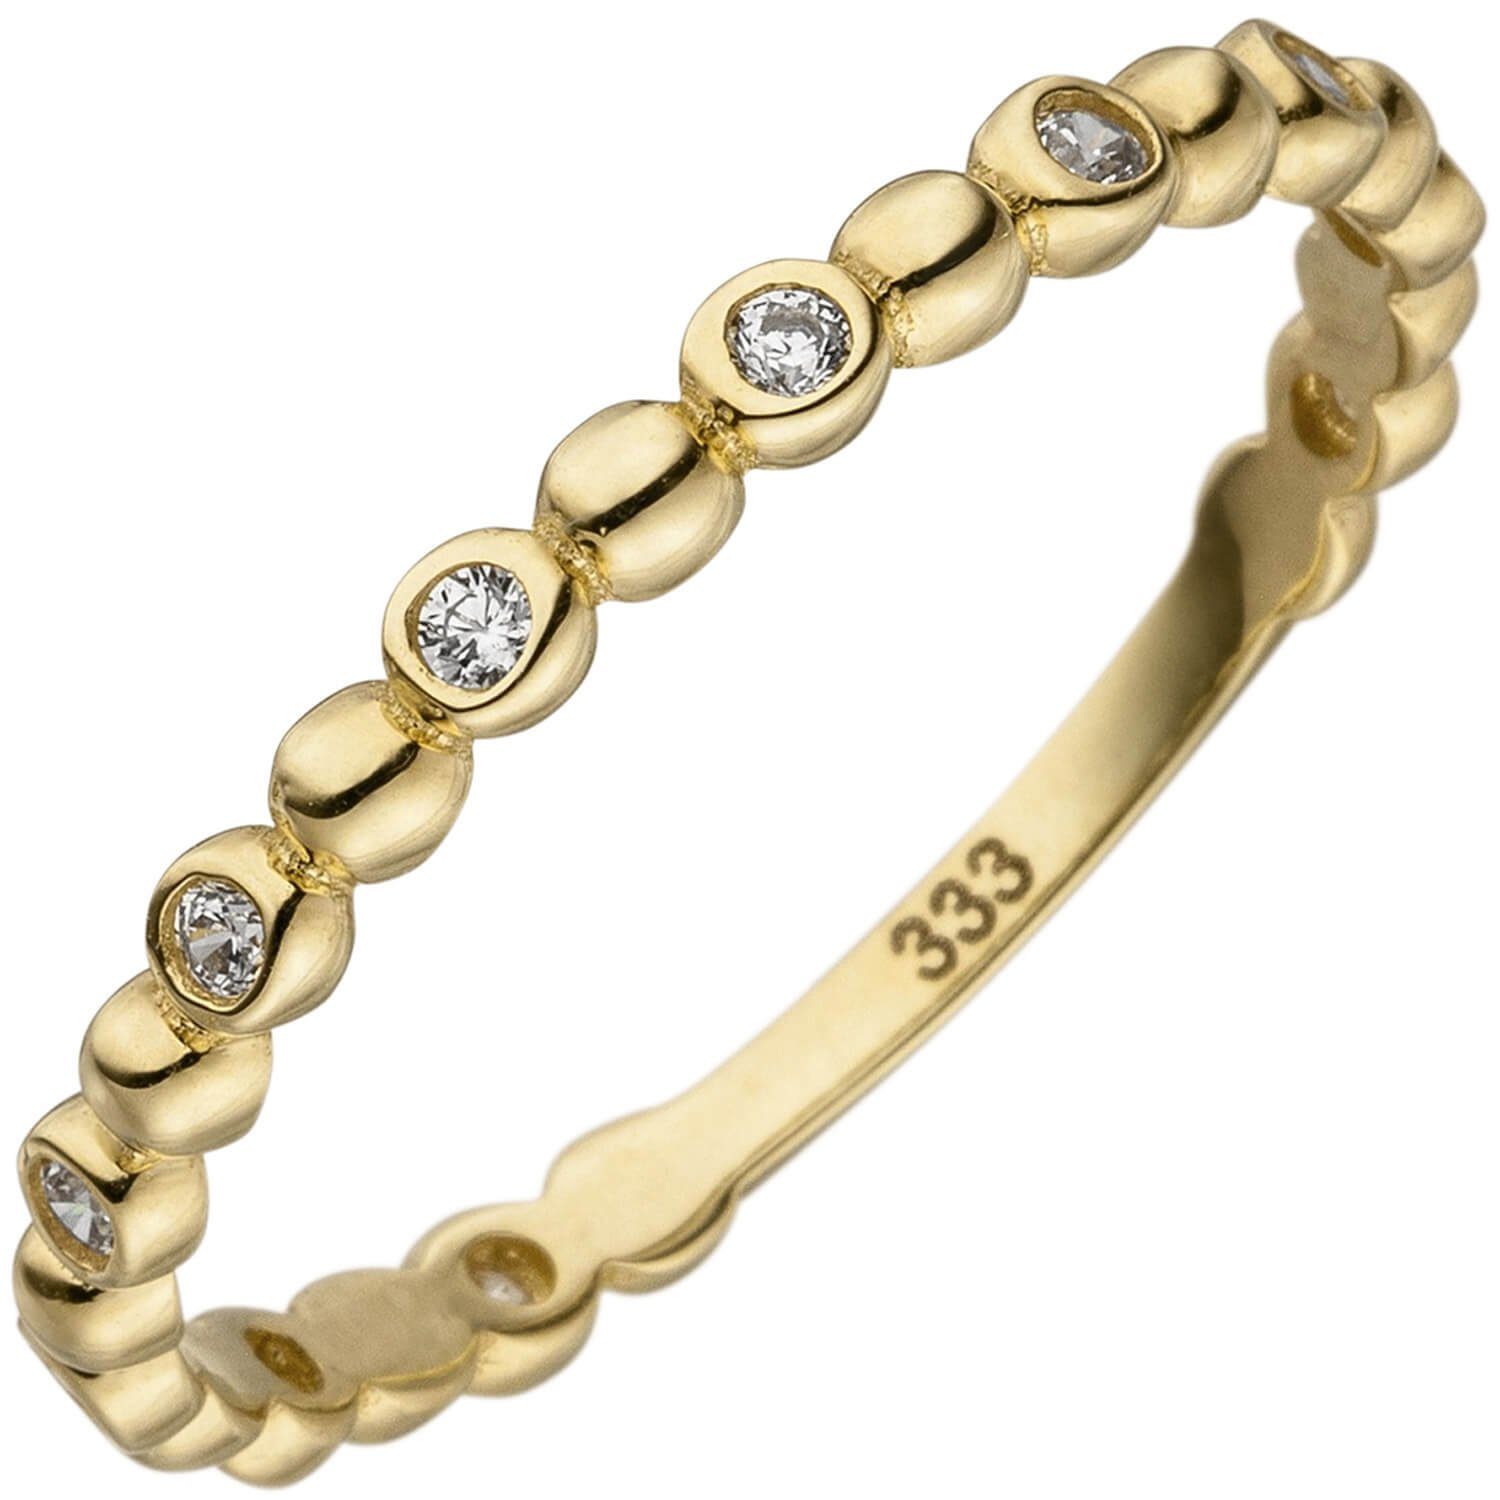 Schmuck Krone Fingerring Kugel-Ring Damenring 11 Zirkonia weiß 333 Gold Gelbgold Fingerring 2,2mm breit, Gold 333